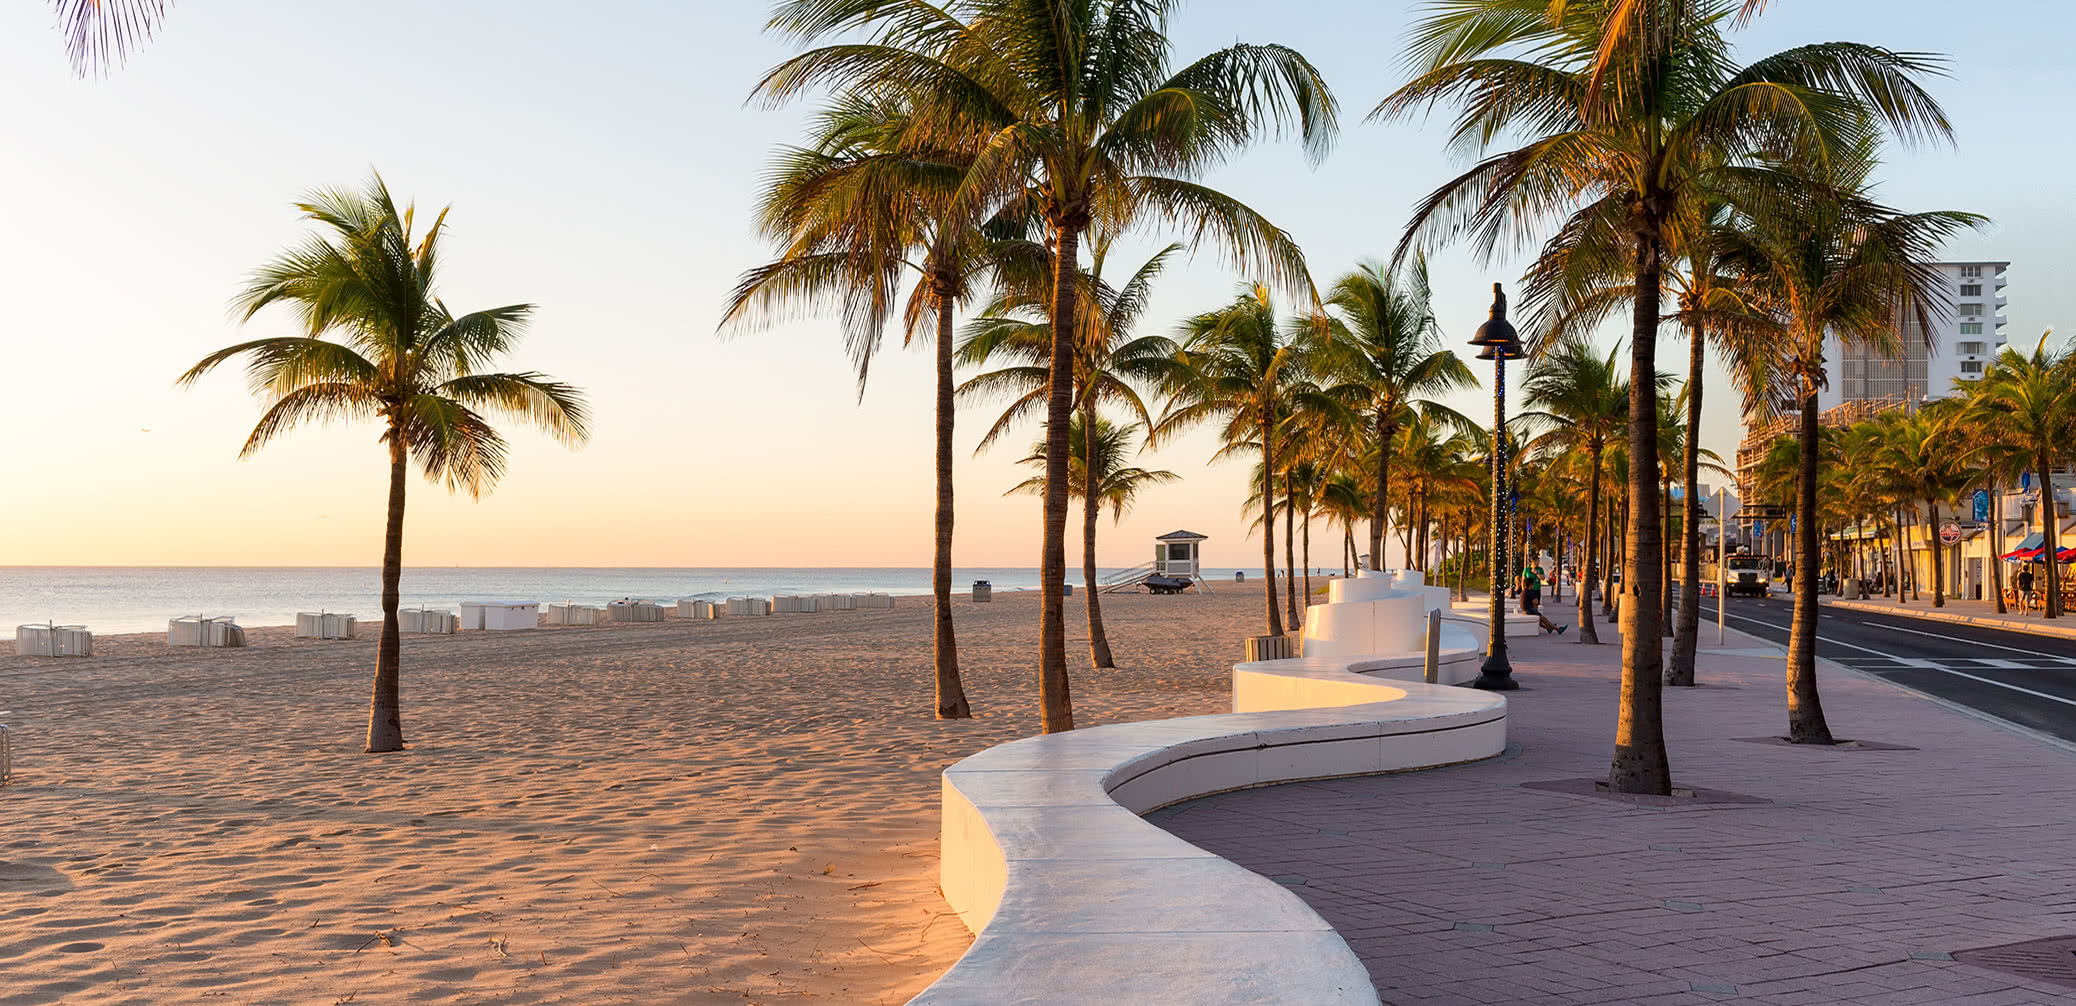 Four Seasons Fort Lauderdale Vs. Ritz-Carlton Vs. Marriott: Which Is Best?